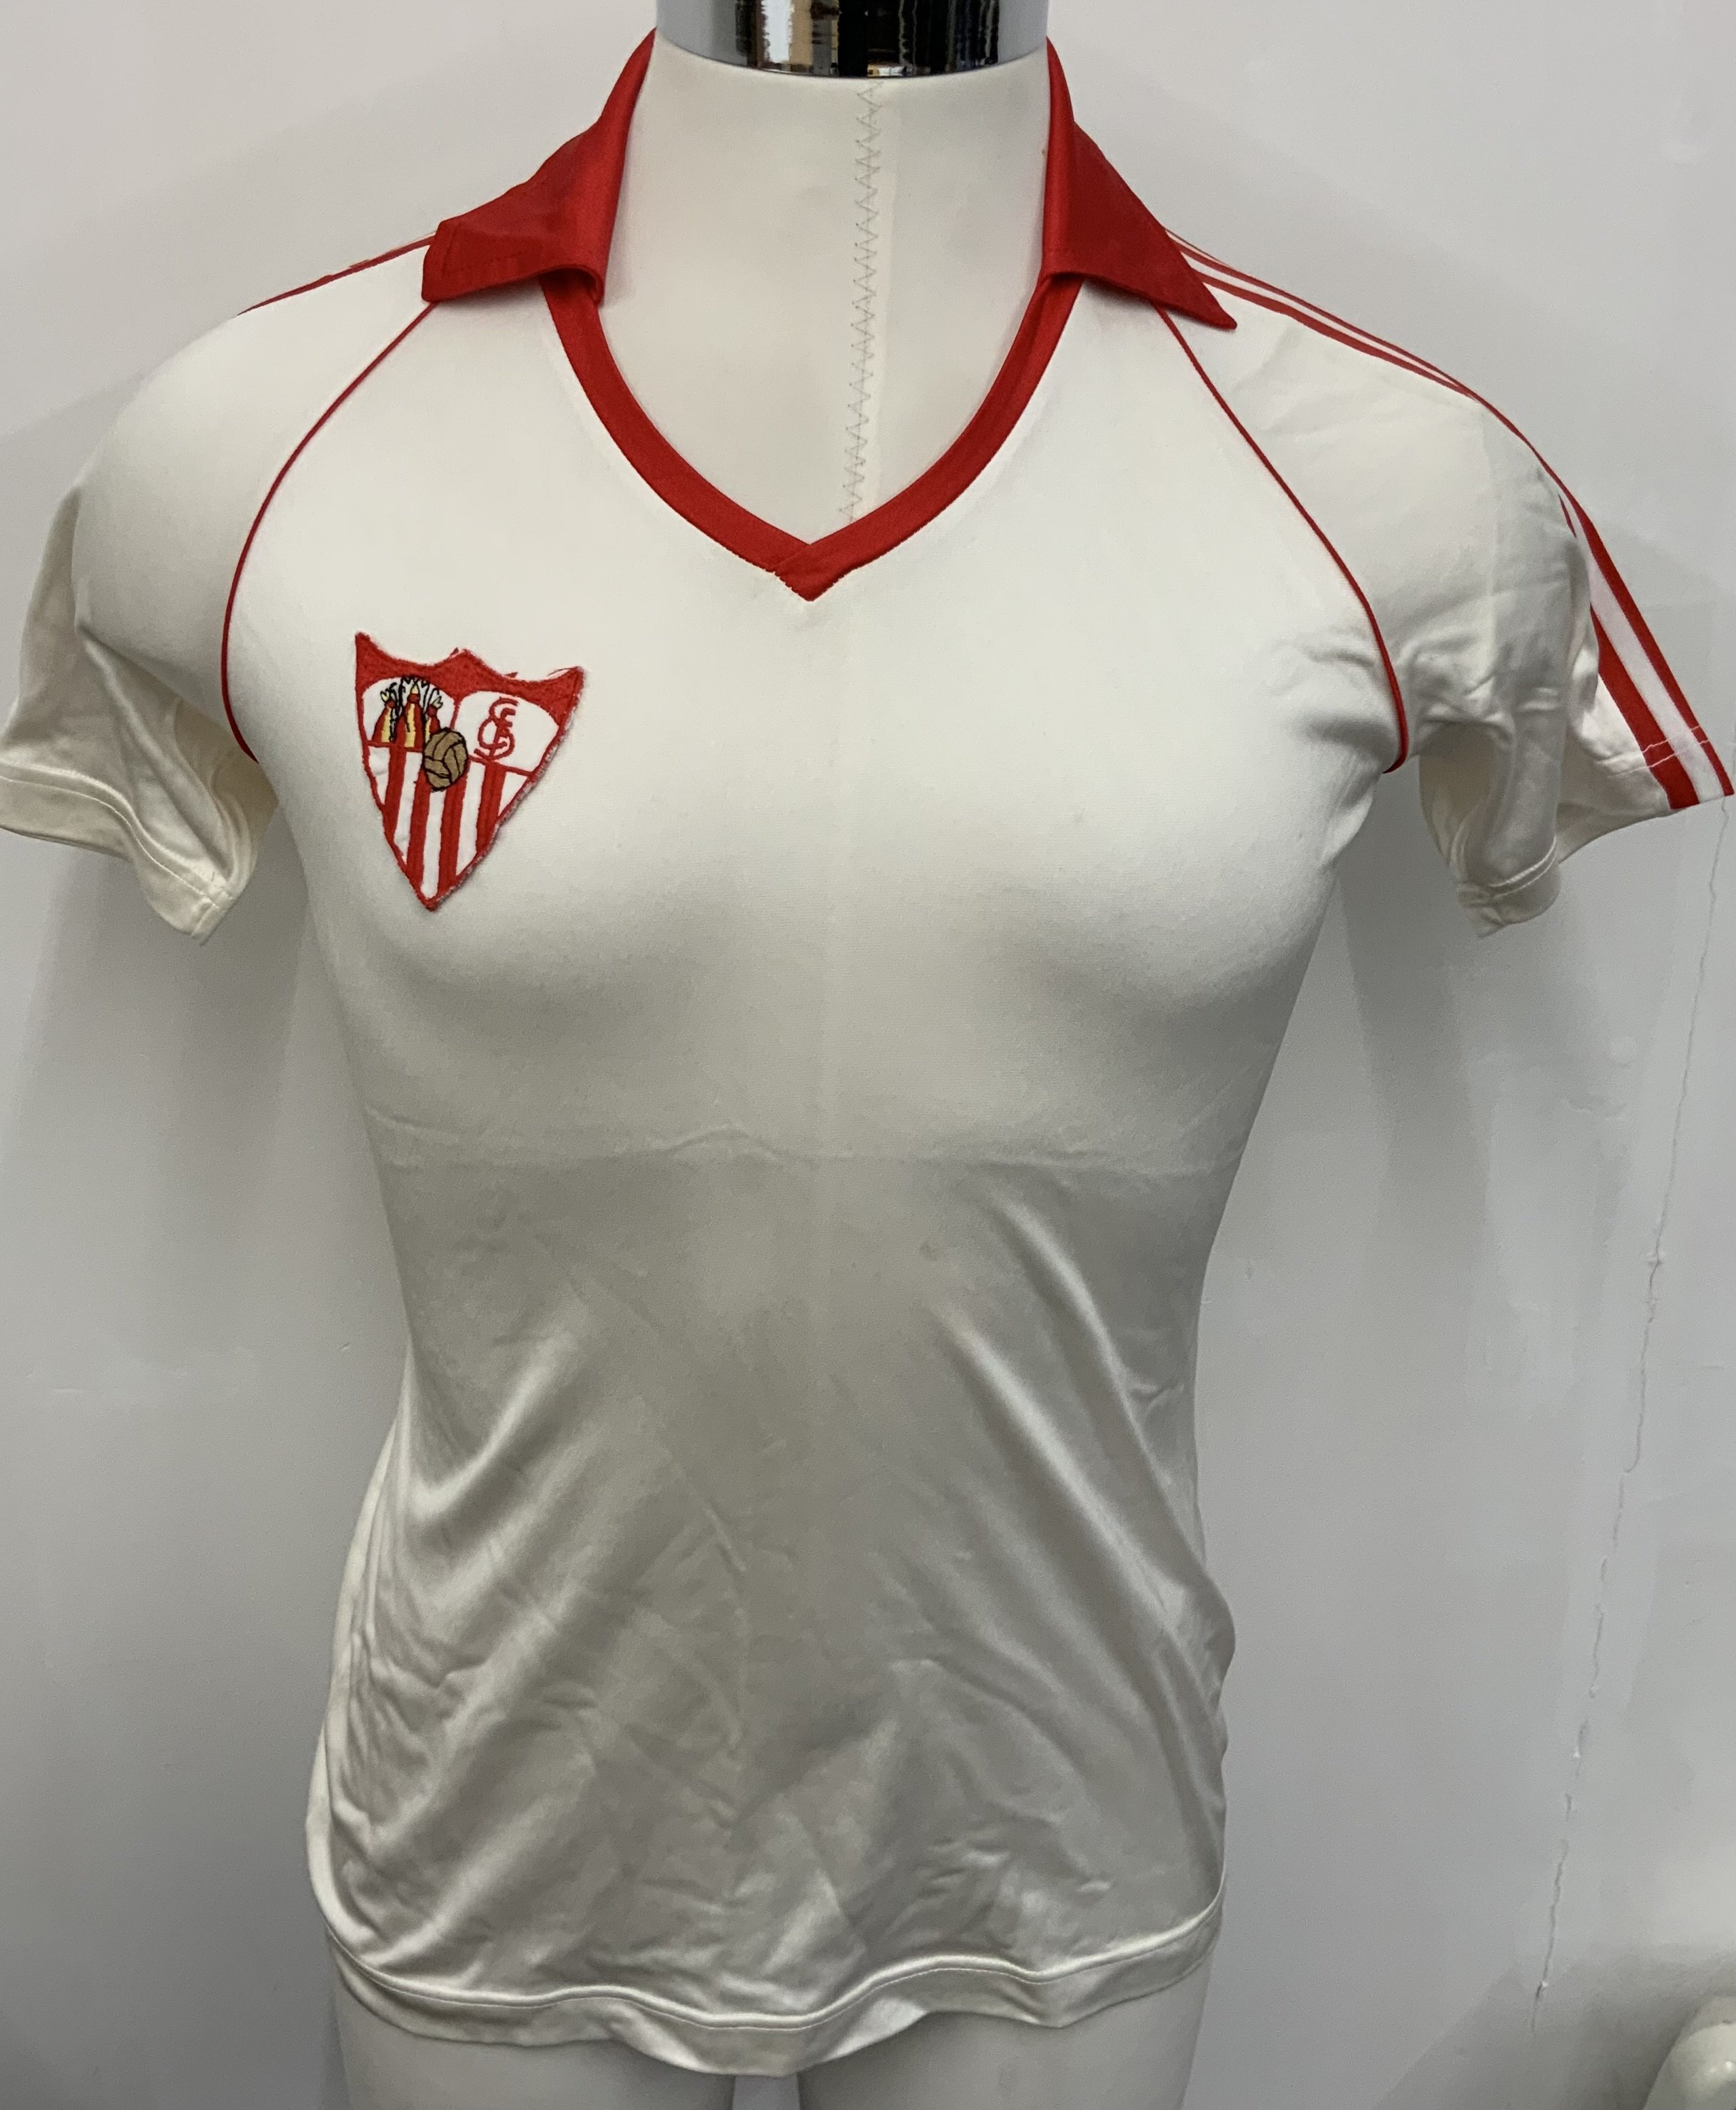 80/81 Seville Match Worn Football Shirt: White wit